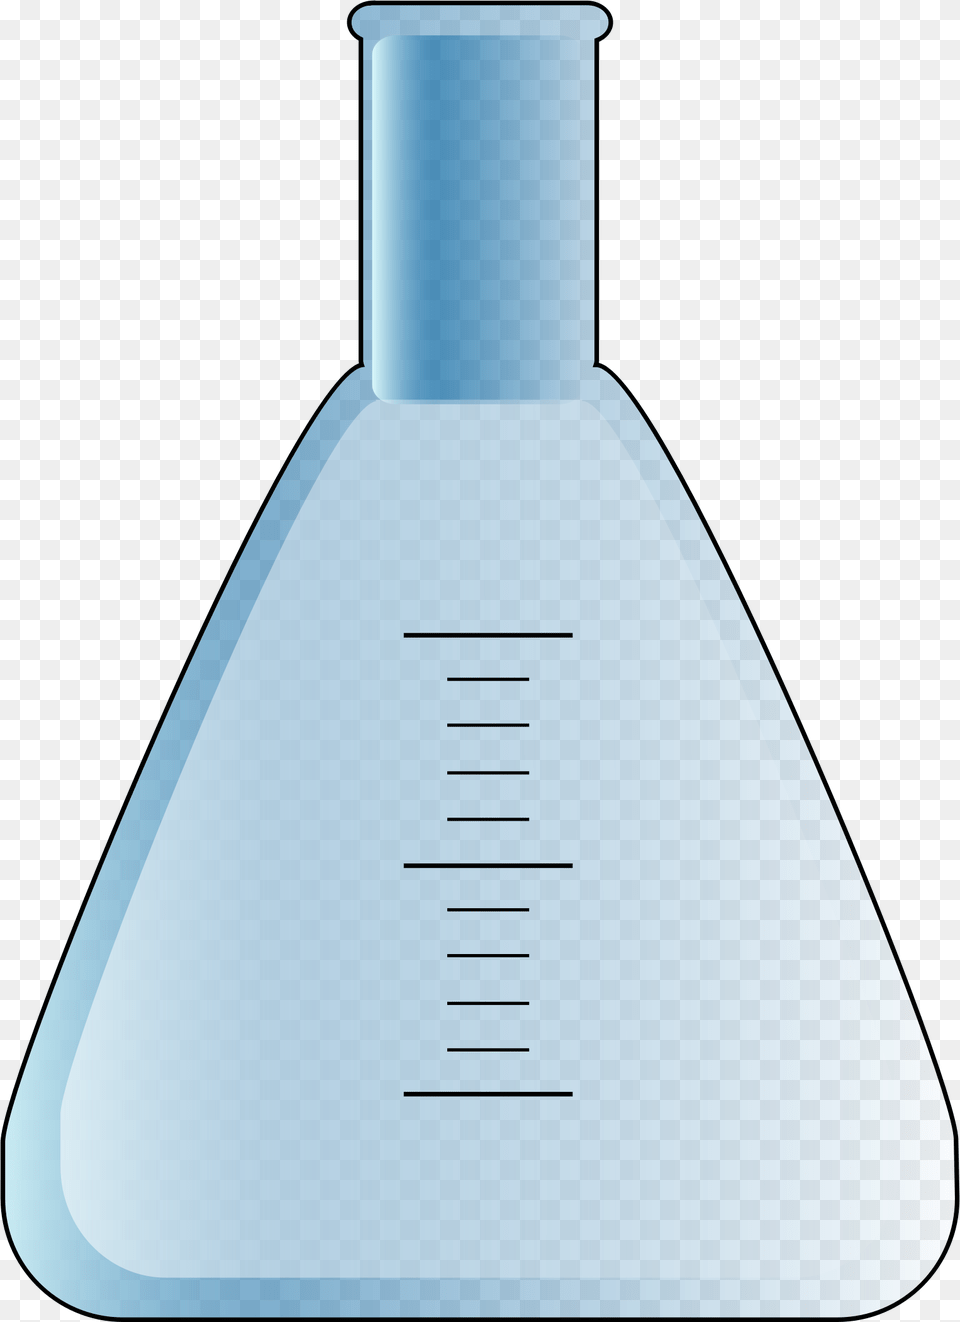 Erlenmeyer Flasks Objetos De Qumica, Bottle, Cone, Cup, Smoke Pipe Png Image